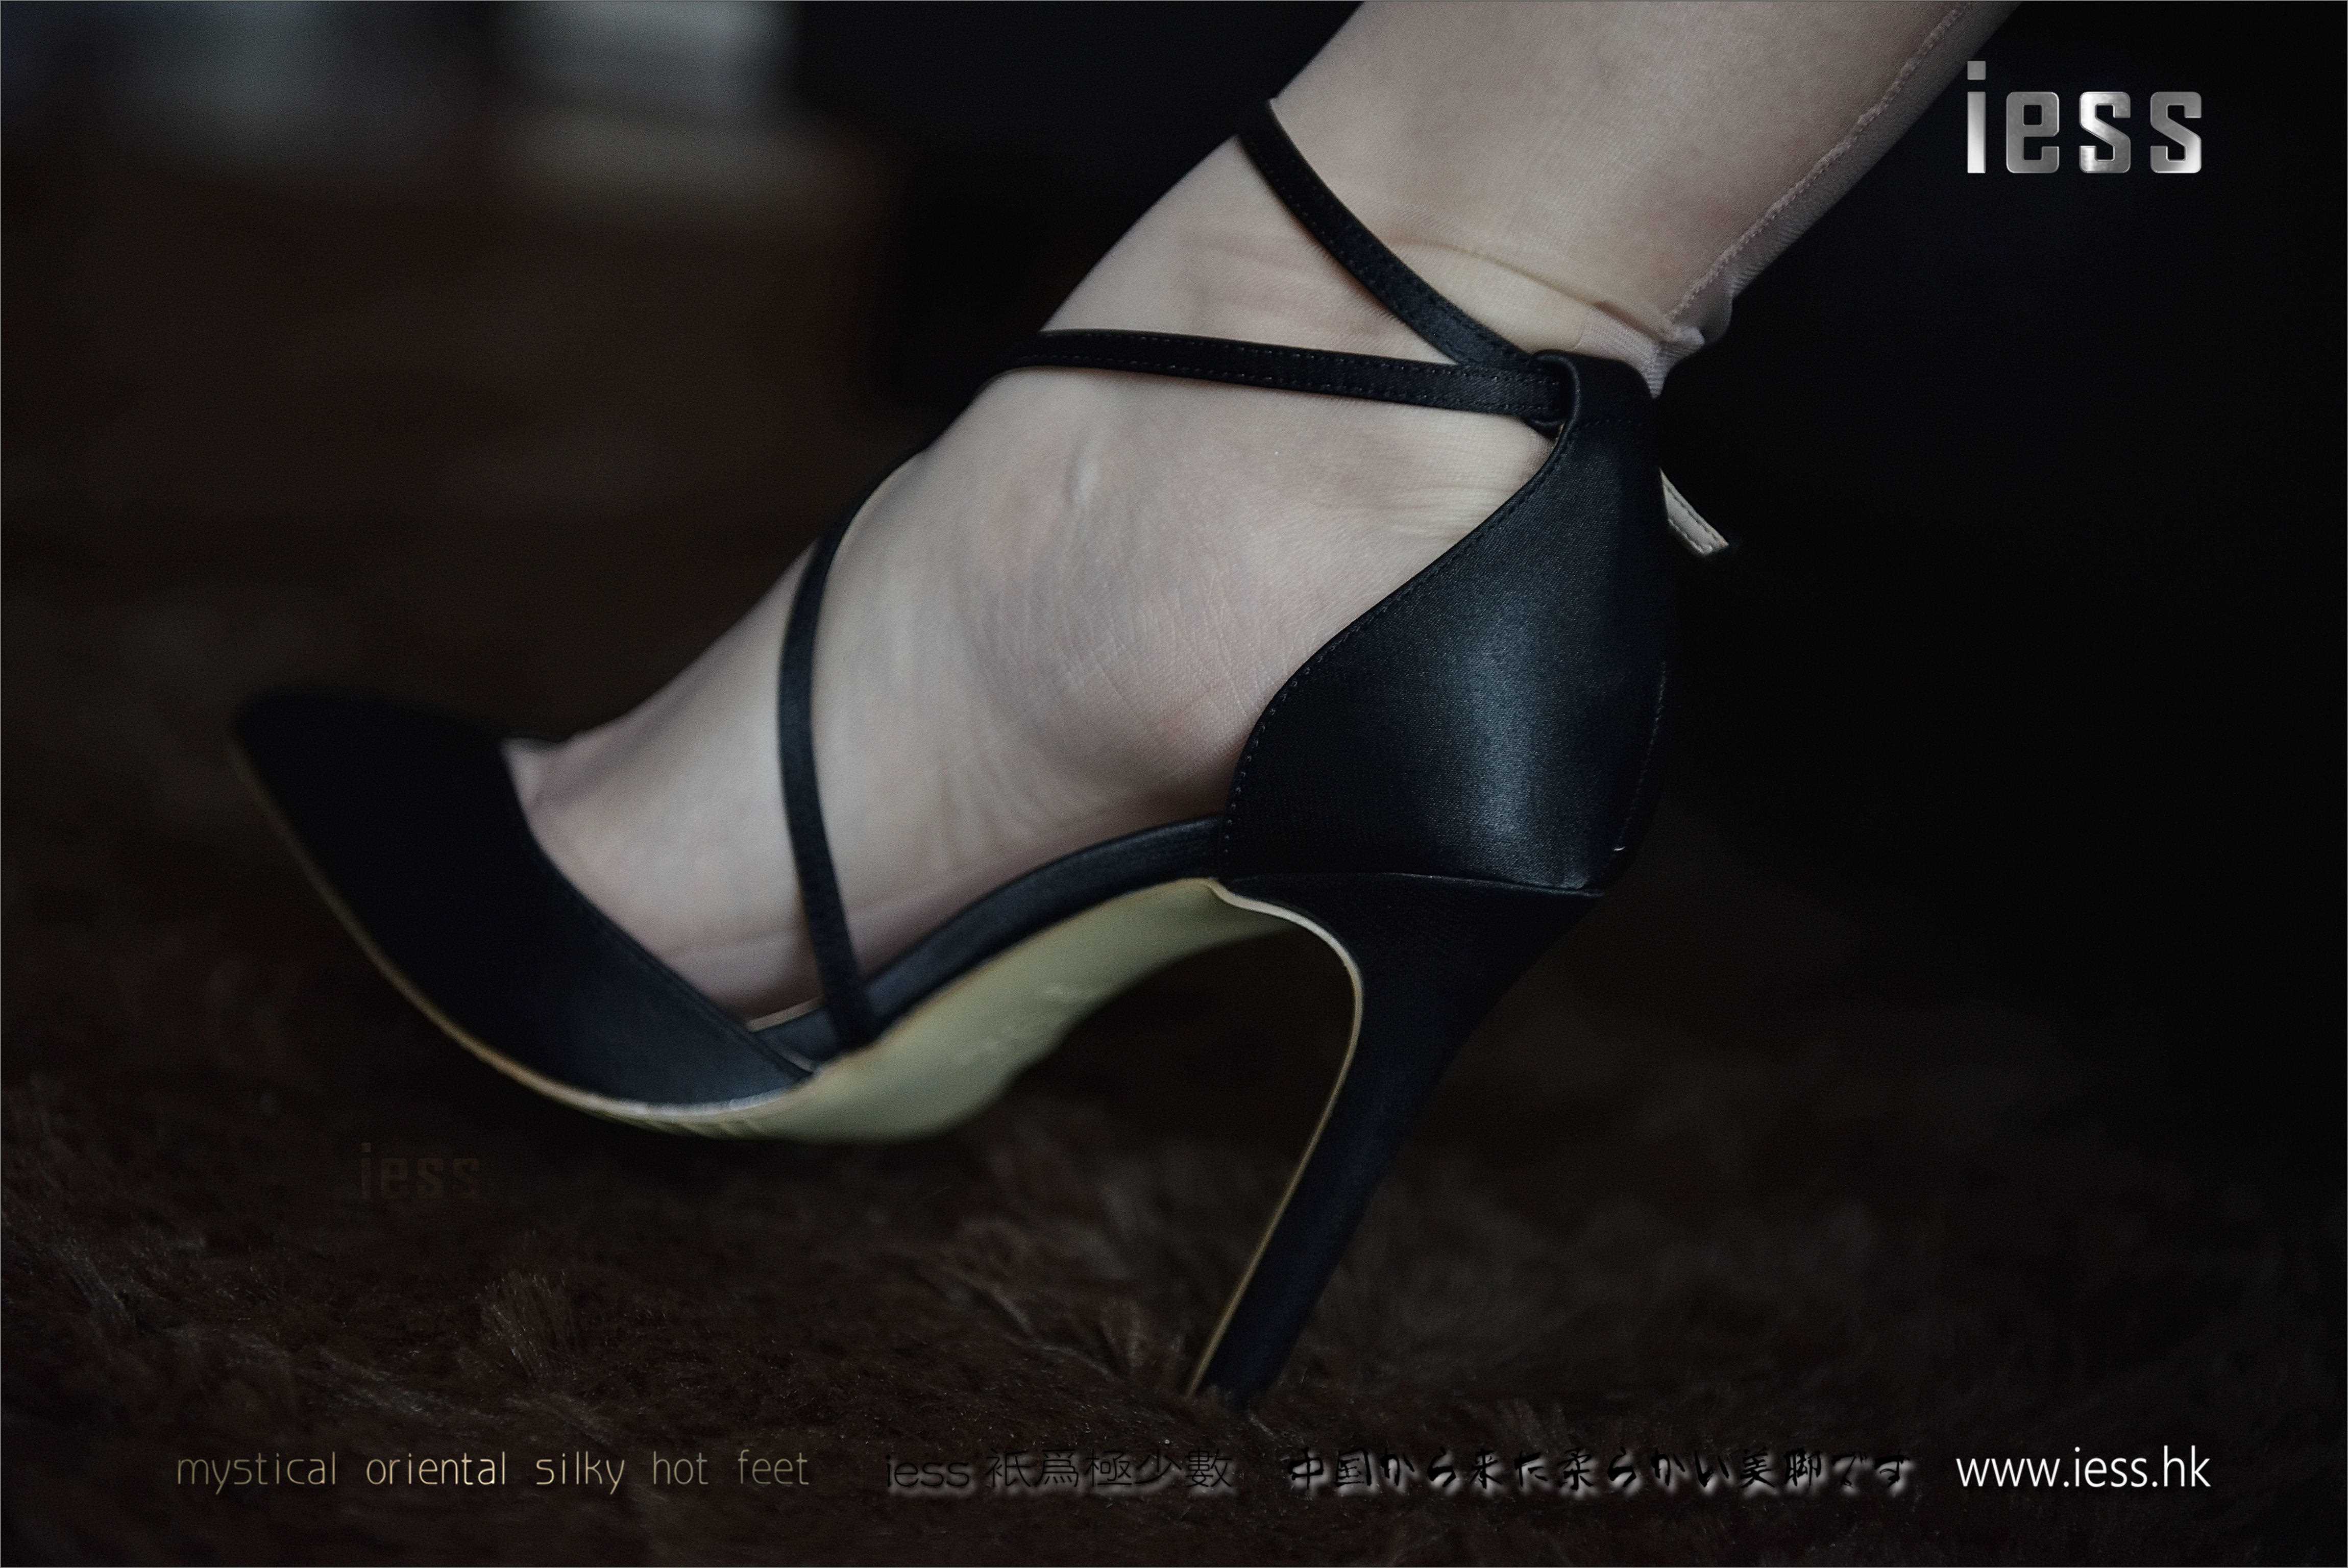 China Beauty Legs and feet 188